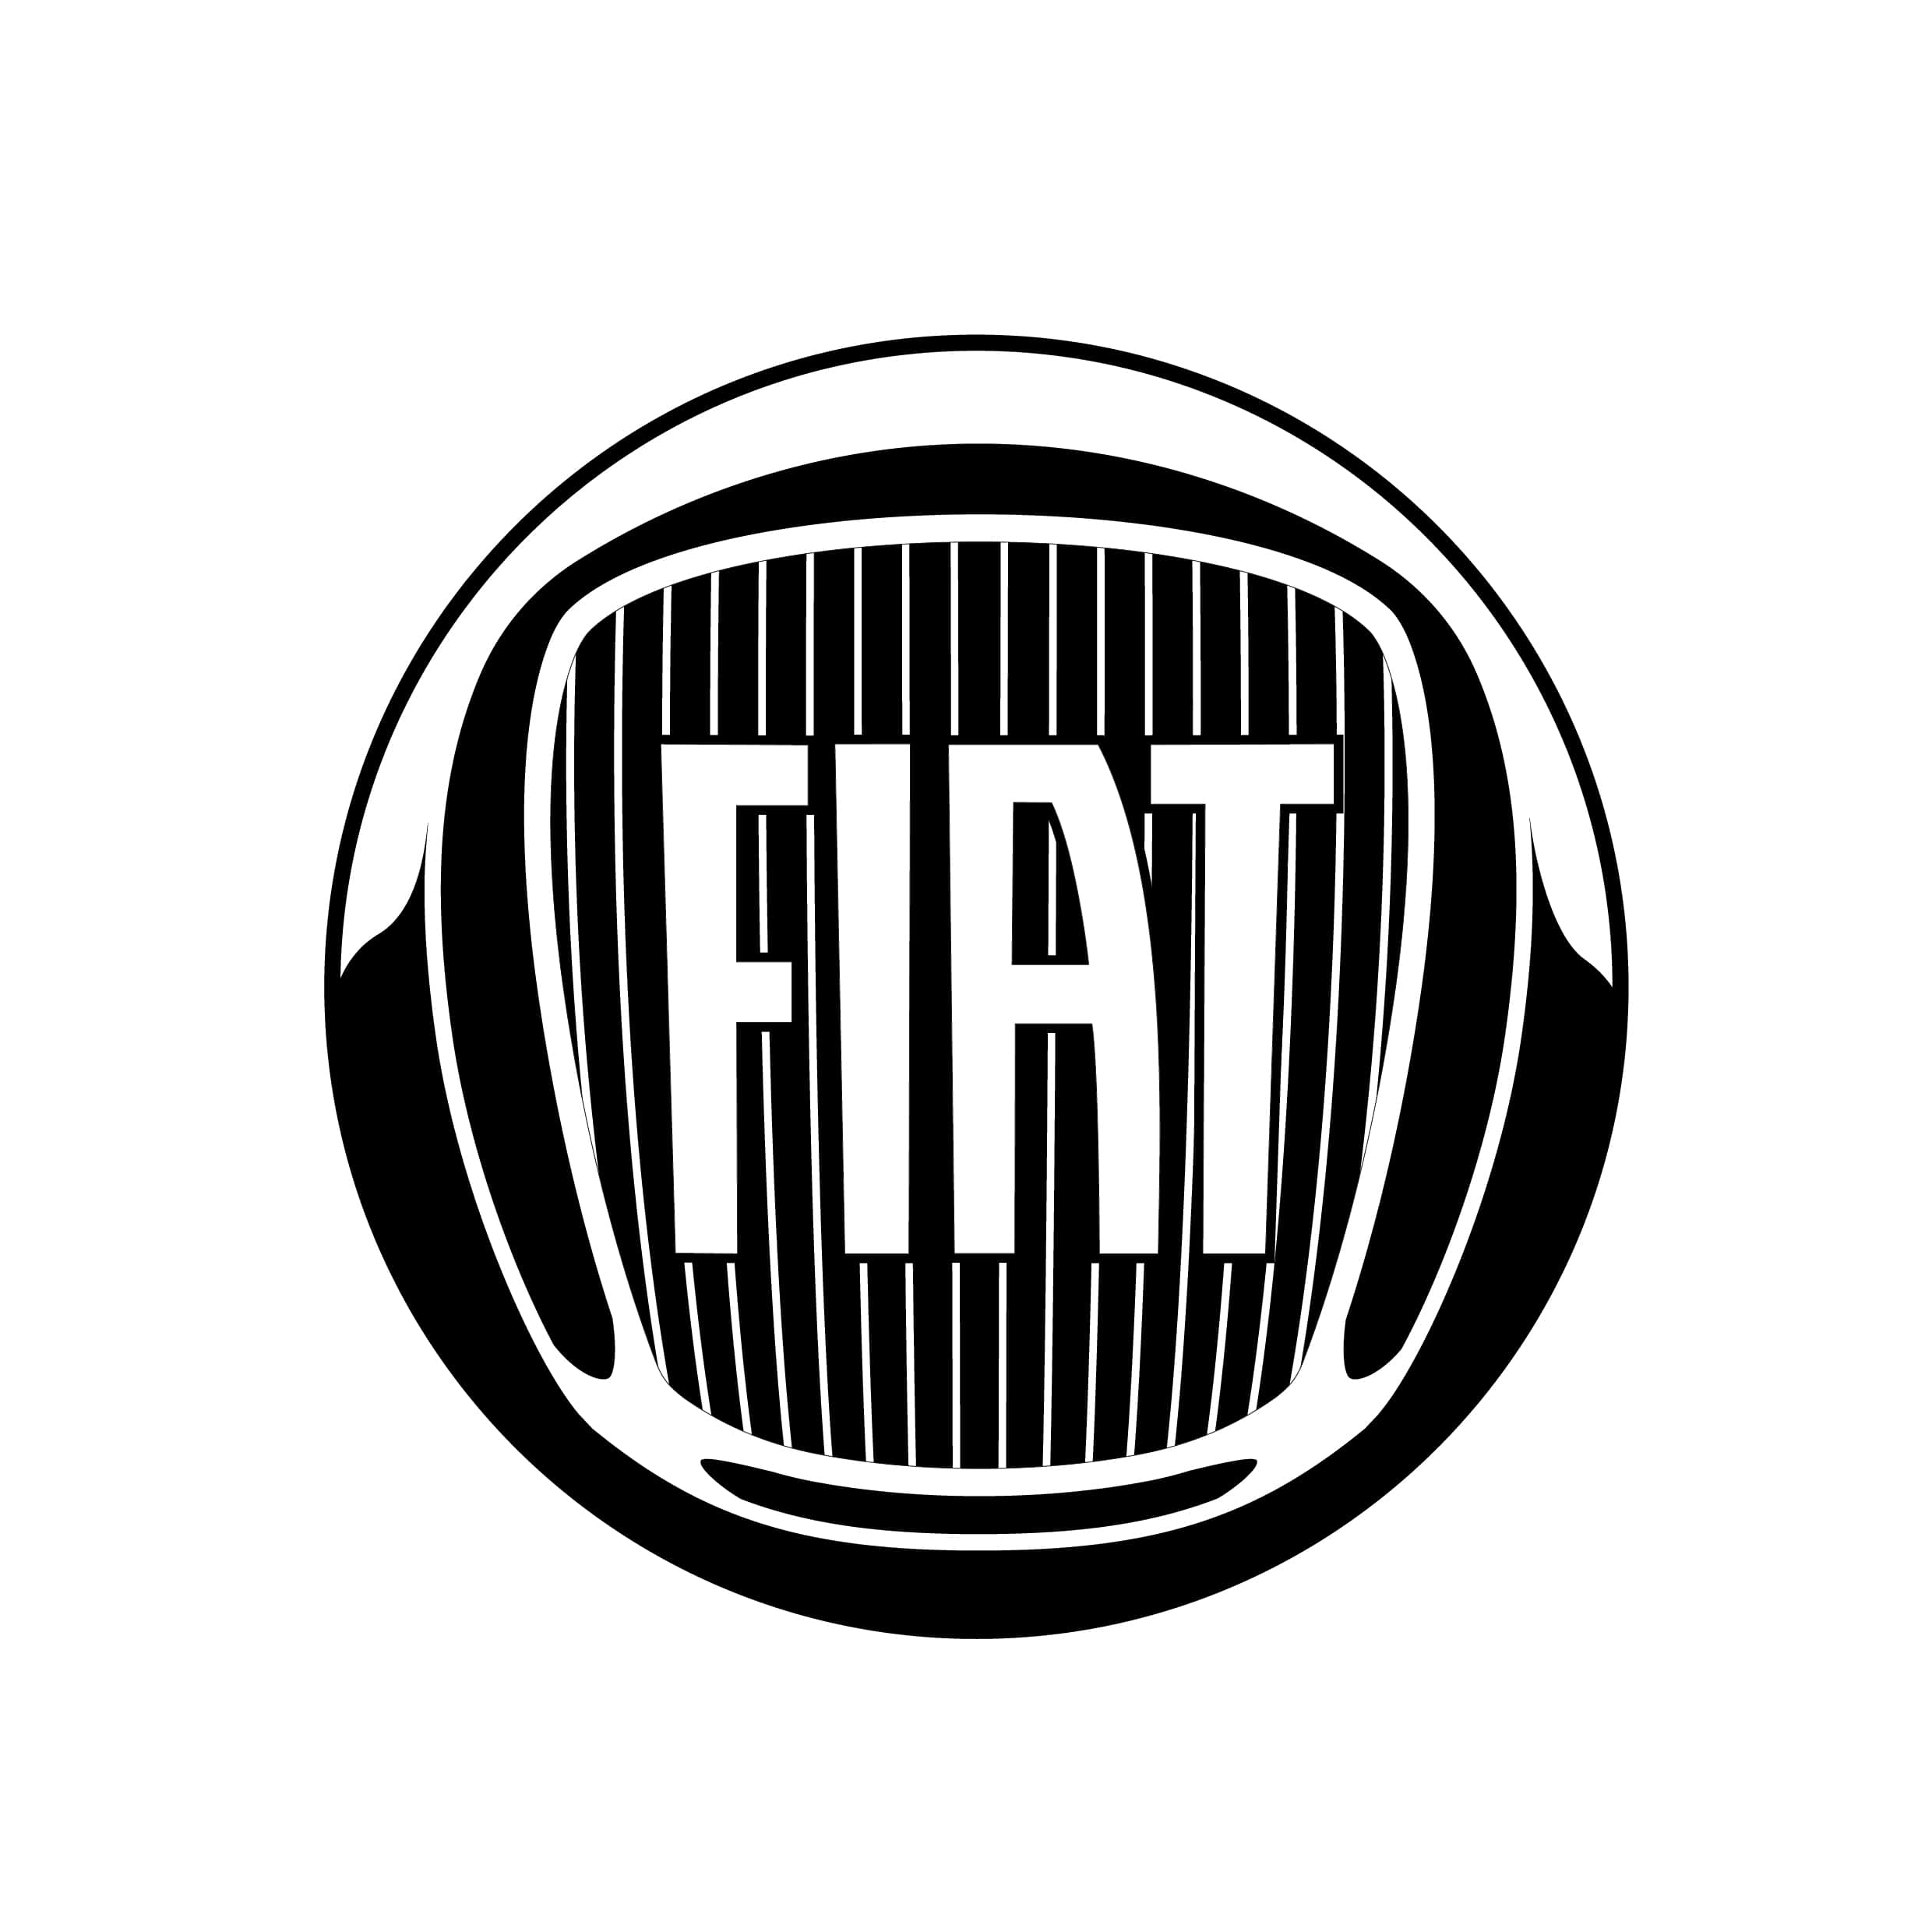 stickers-fiat-ref17-autocollant-voiture-sticker-auto-autocollants-decals-sponsors-racing-tuning-sport-logo copie-min